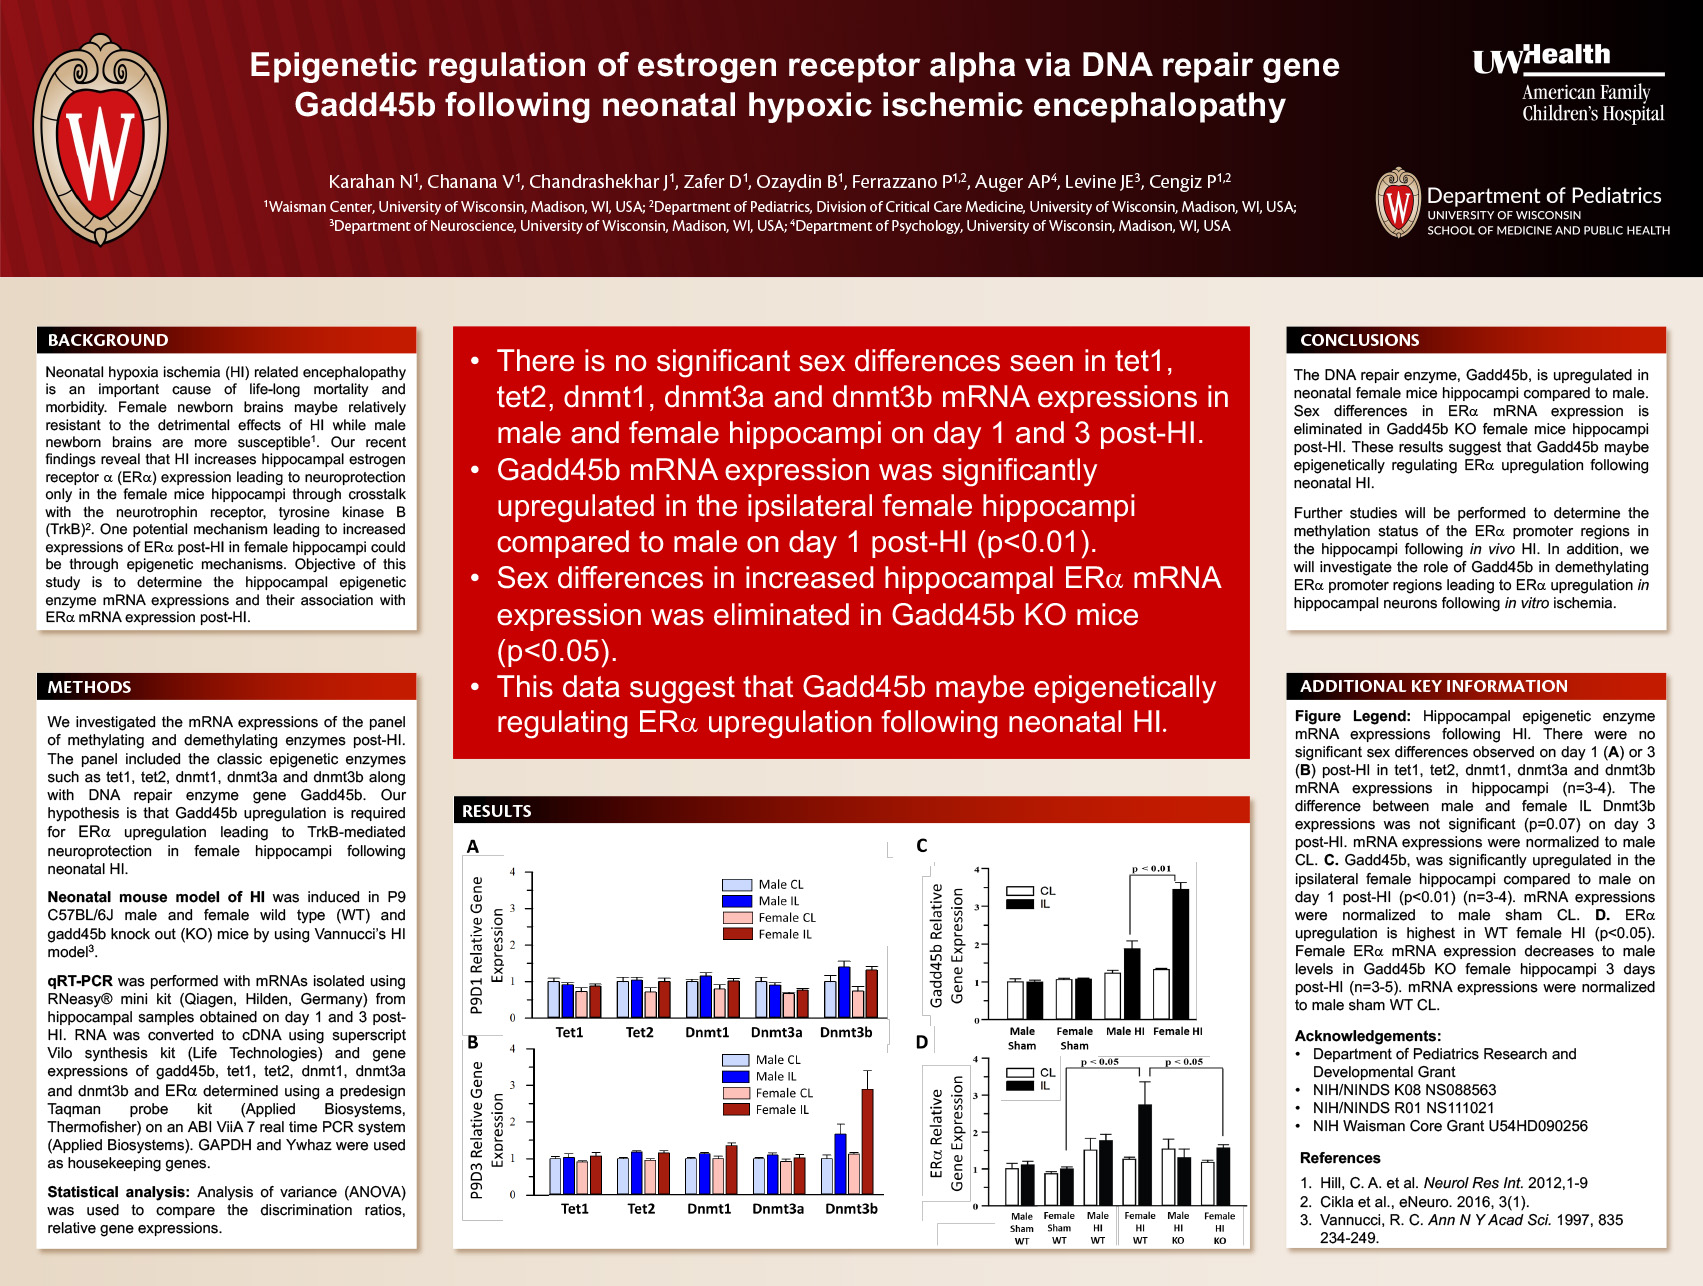 4.	Epigenetic Regulation of Estrogen Receptor Alpha via DNA Repair Gene Gadd45b Following Neonatal Hypoxic Ischemic Encephalopathy image